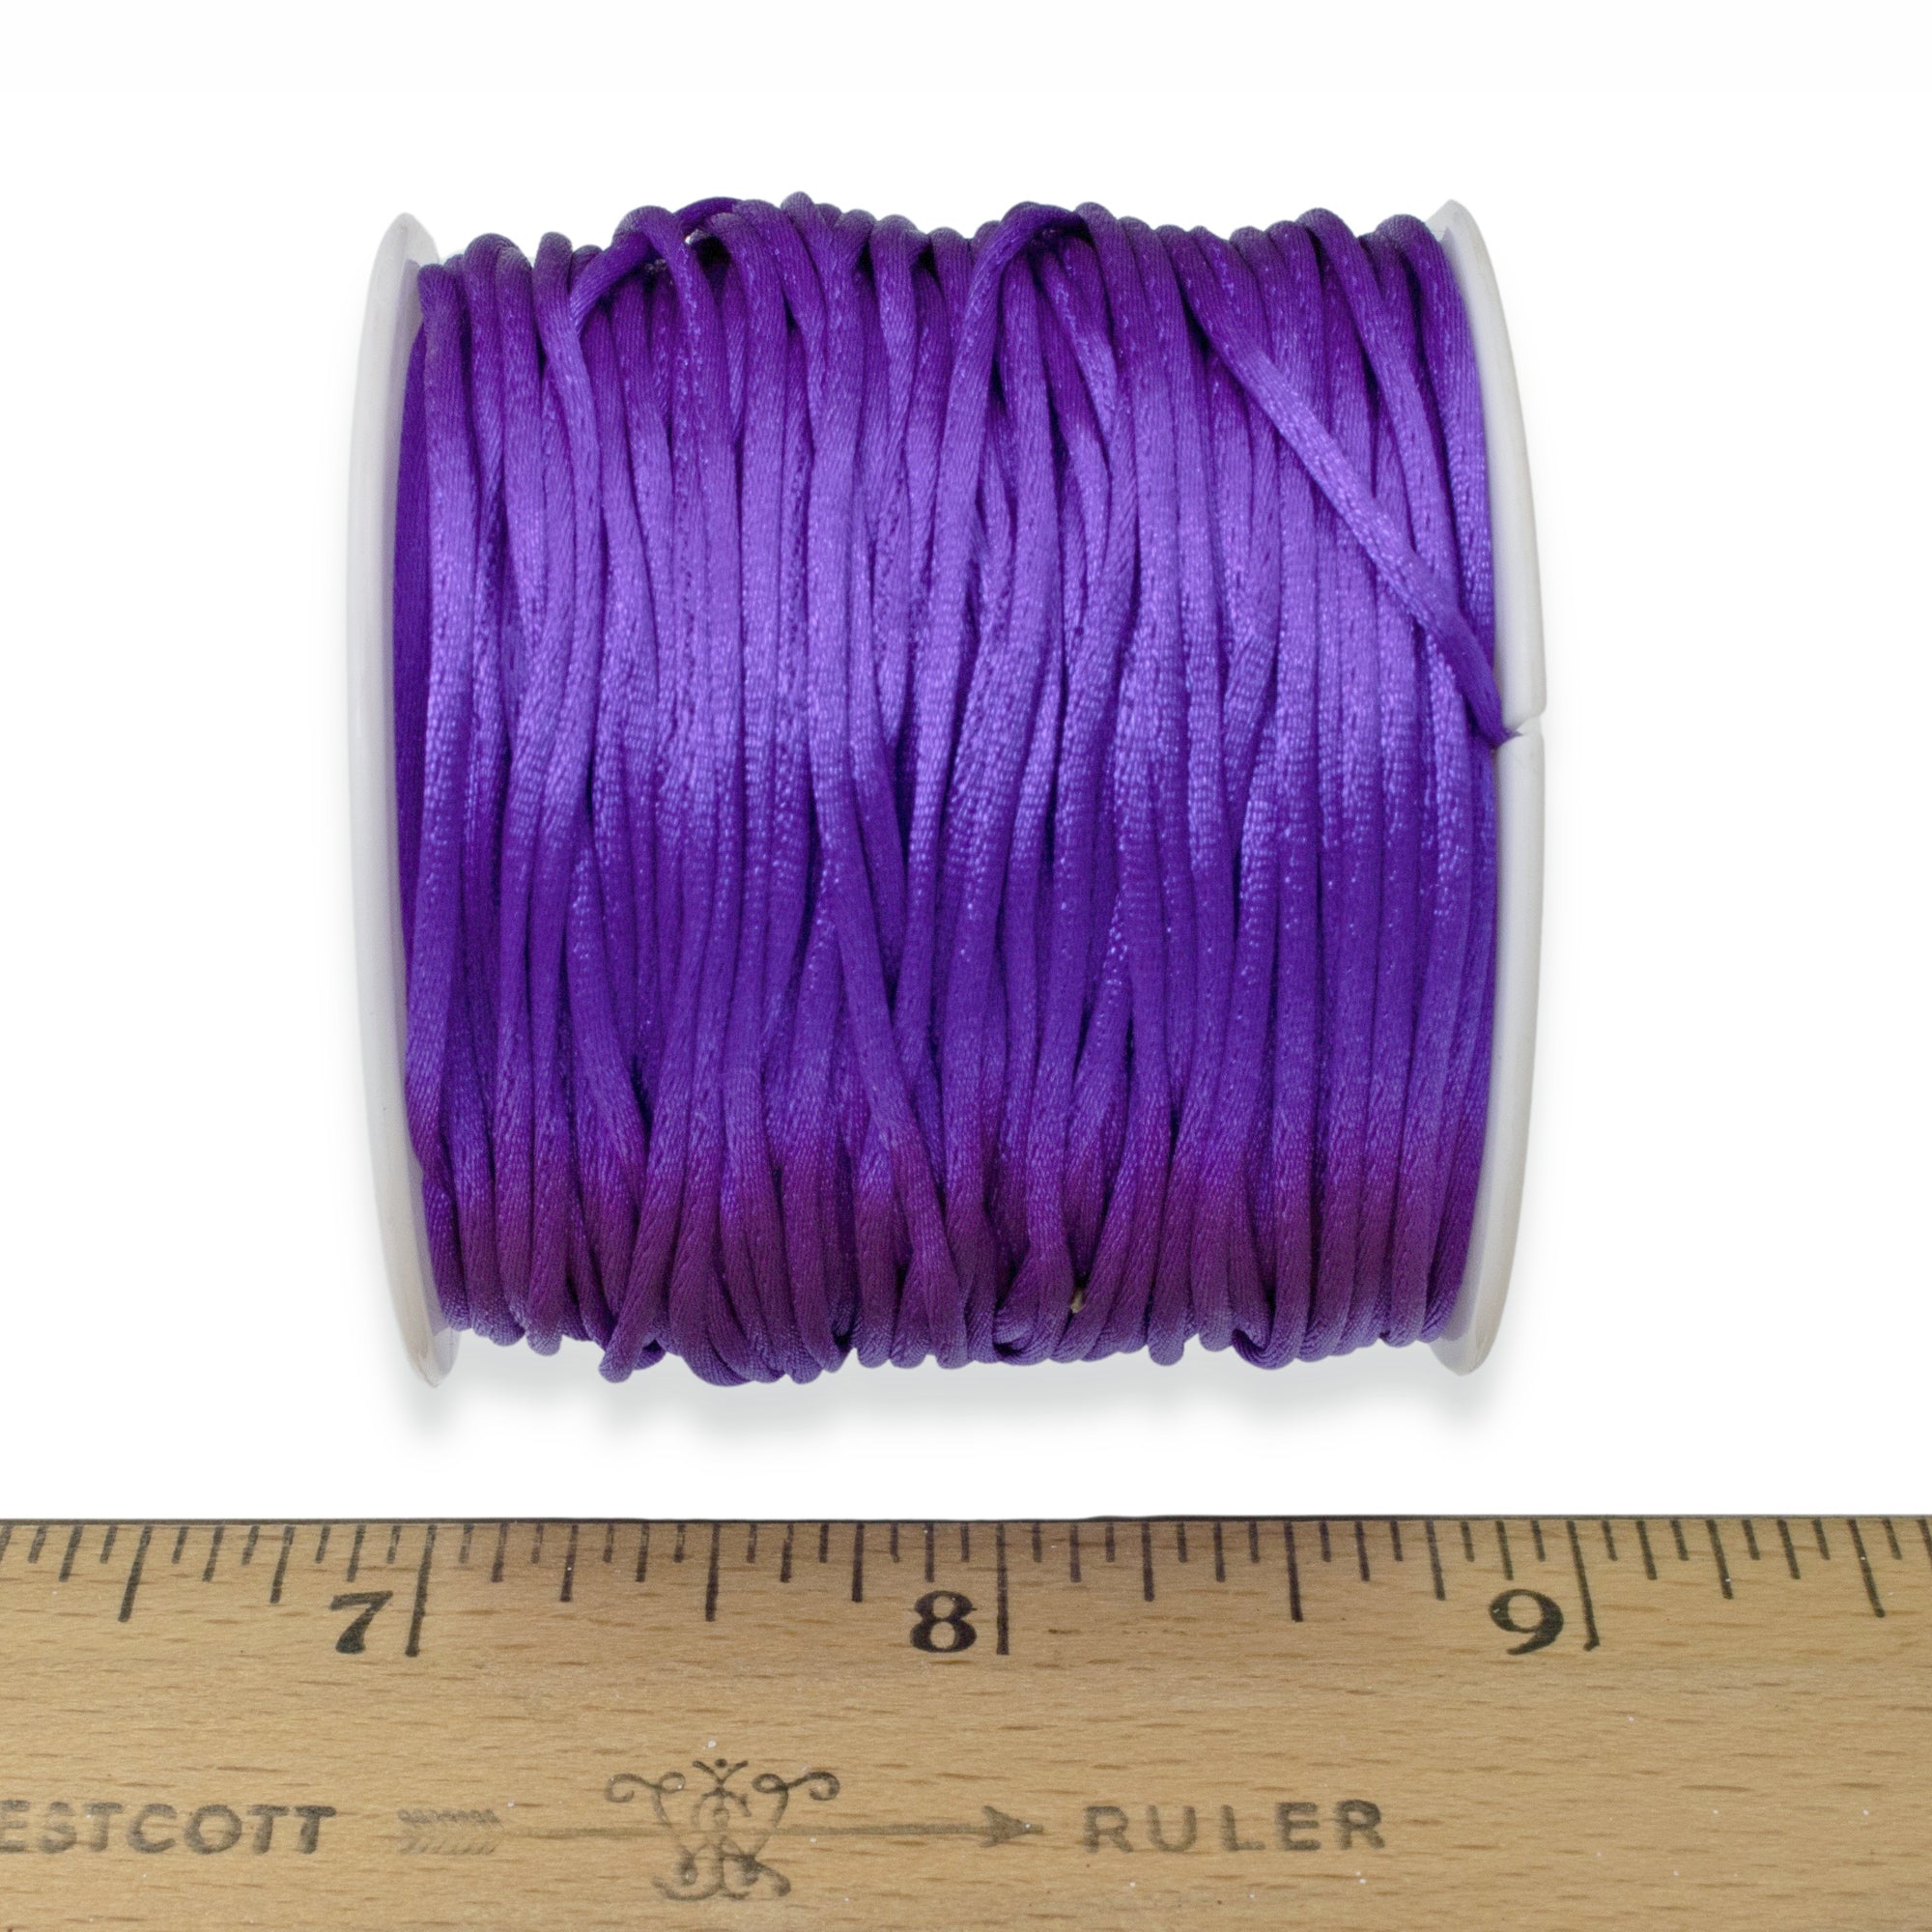 1mm Purple Satin Nylon Cord